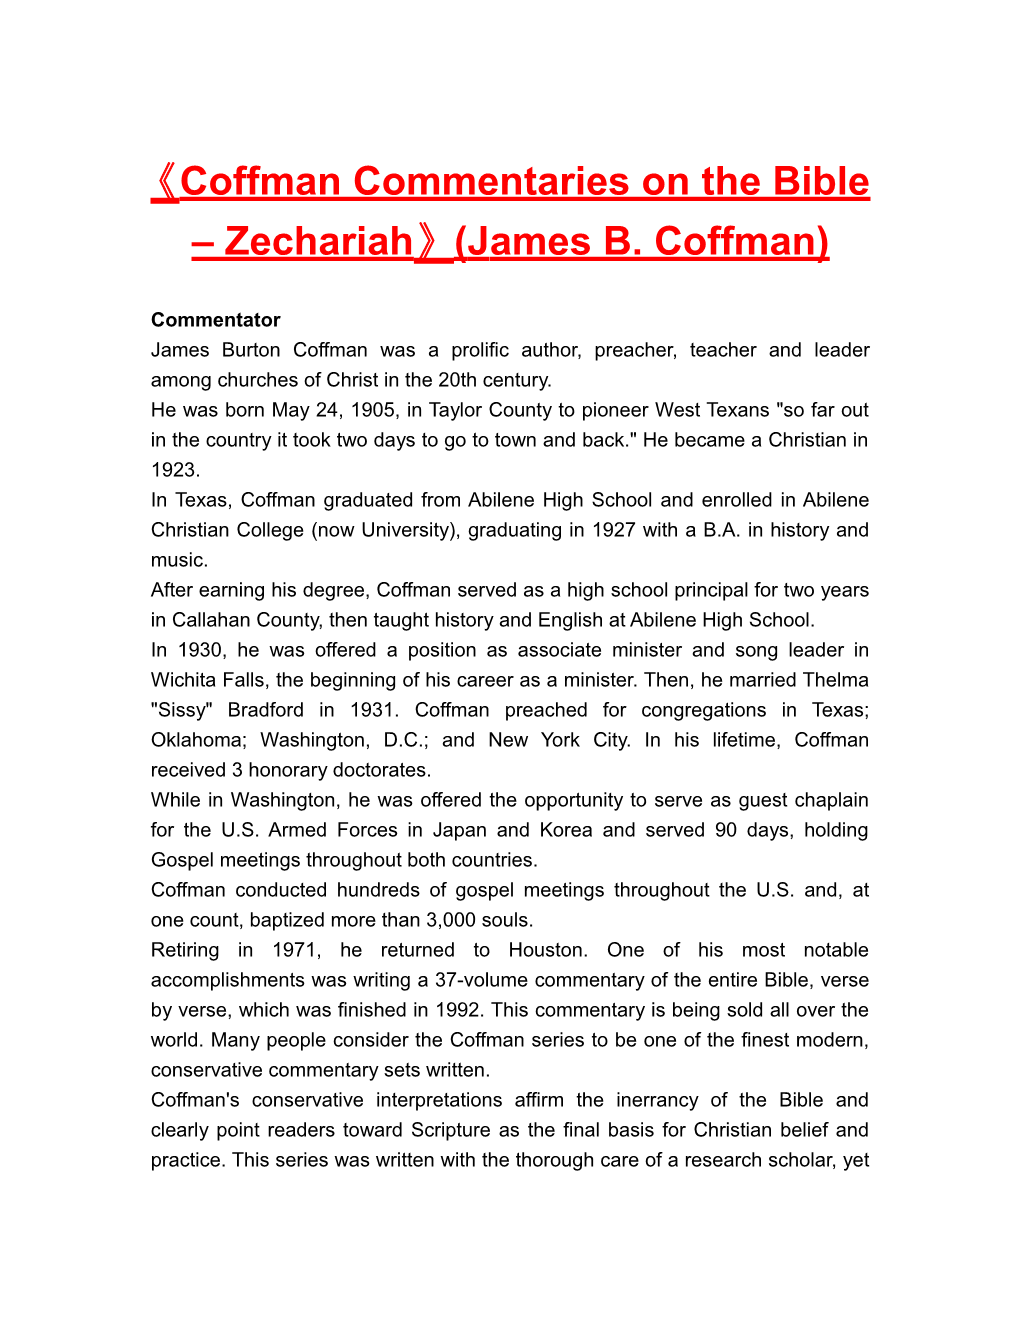 Coffman Commentaries on the Bible Zechariah (James B. Coffman)